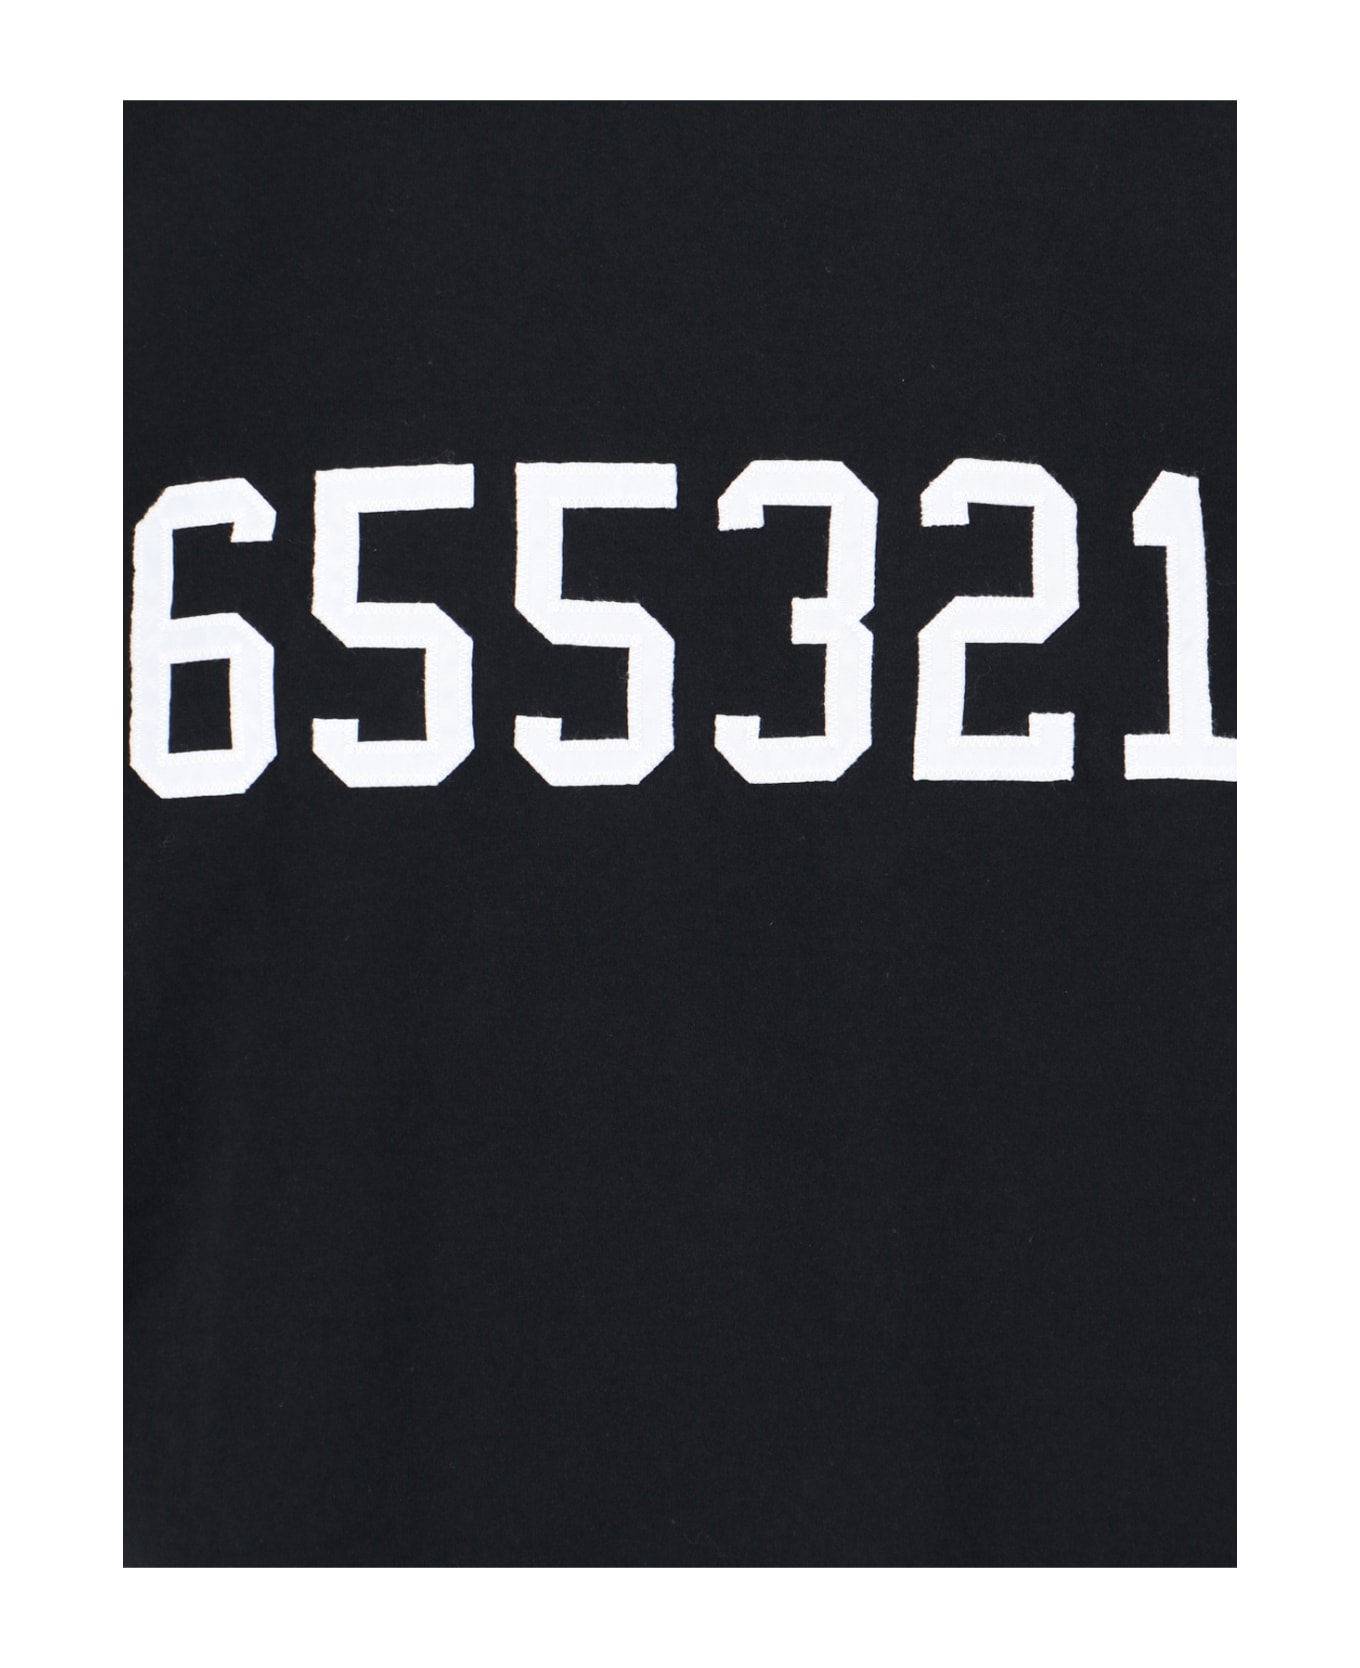 Undercover Jun Takahashi '655321' T-shirt - Black  